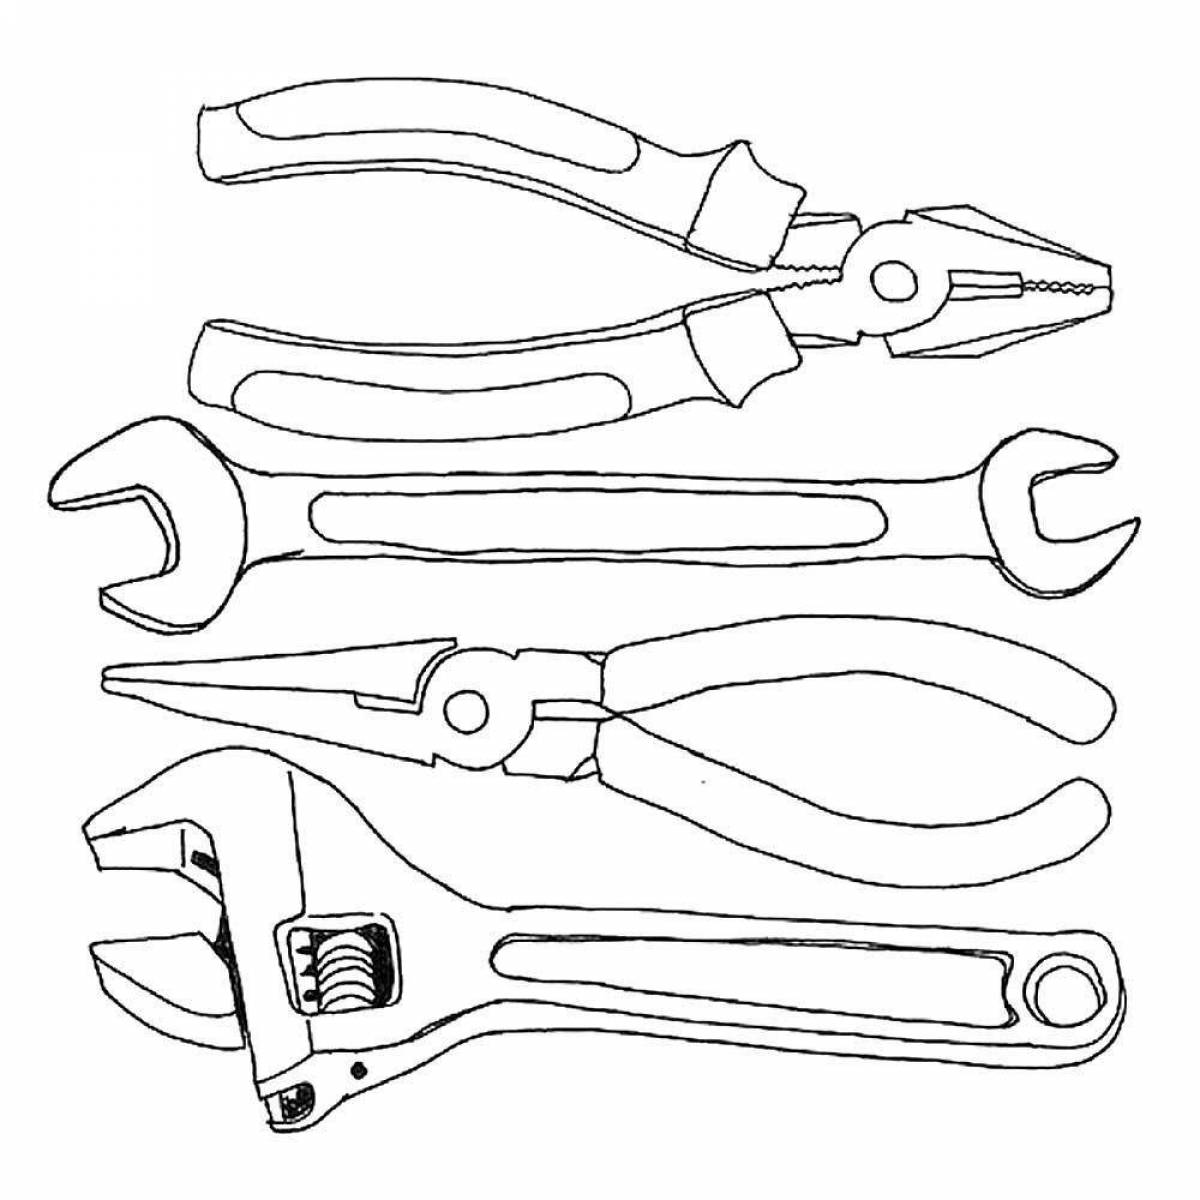 Children's tools #6